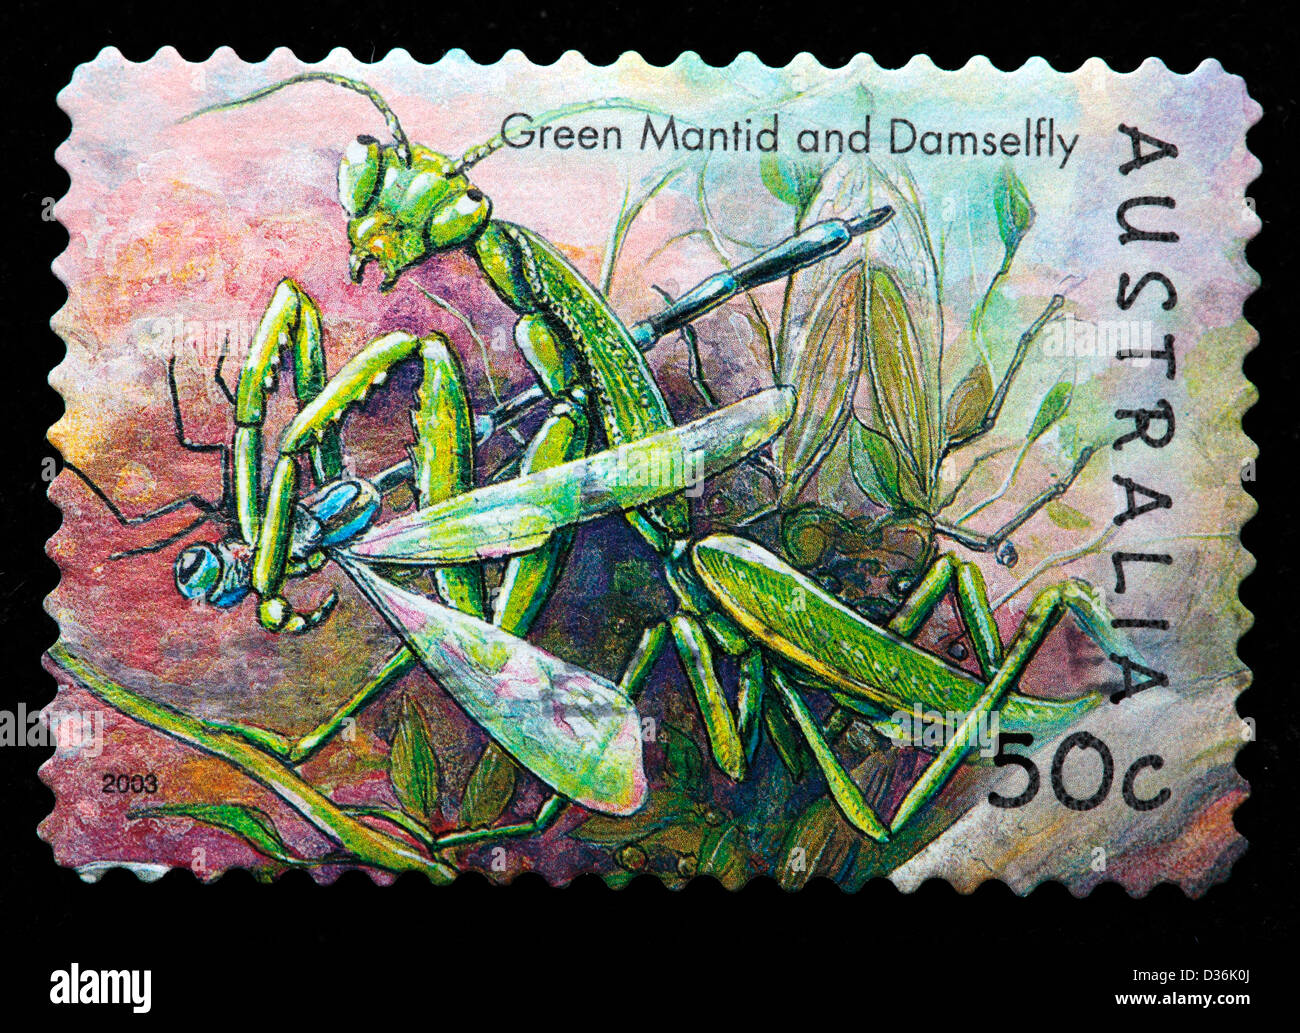 Green Mantid and damselfly, postage stamp, Australia, 2003 Stock Photo